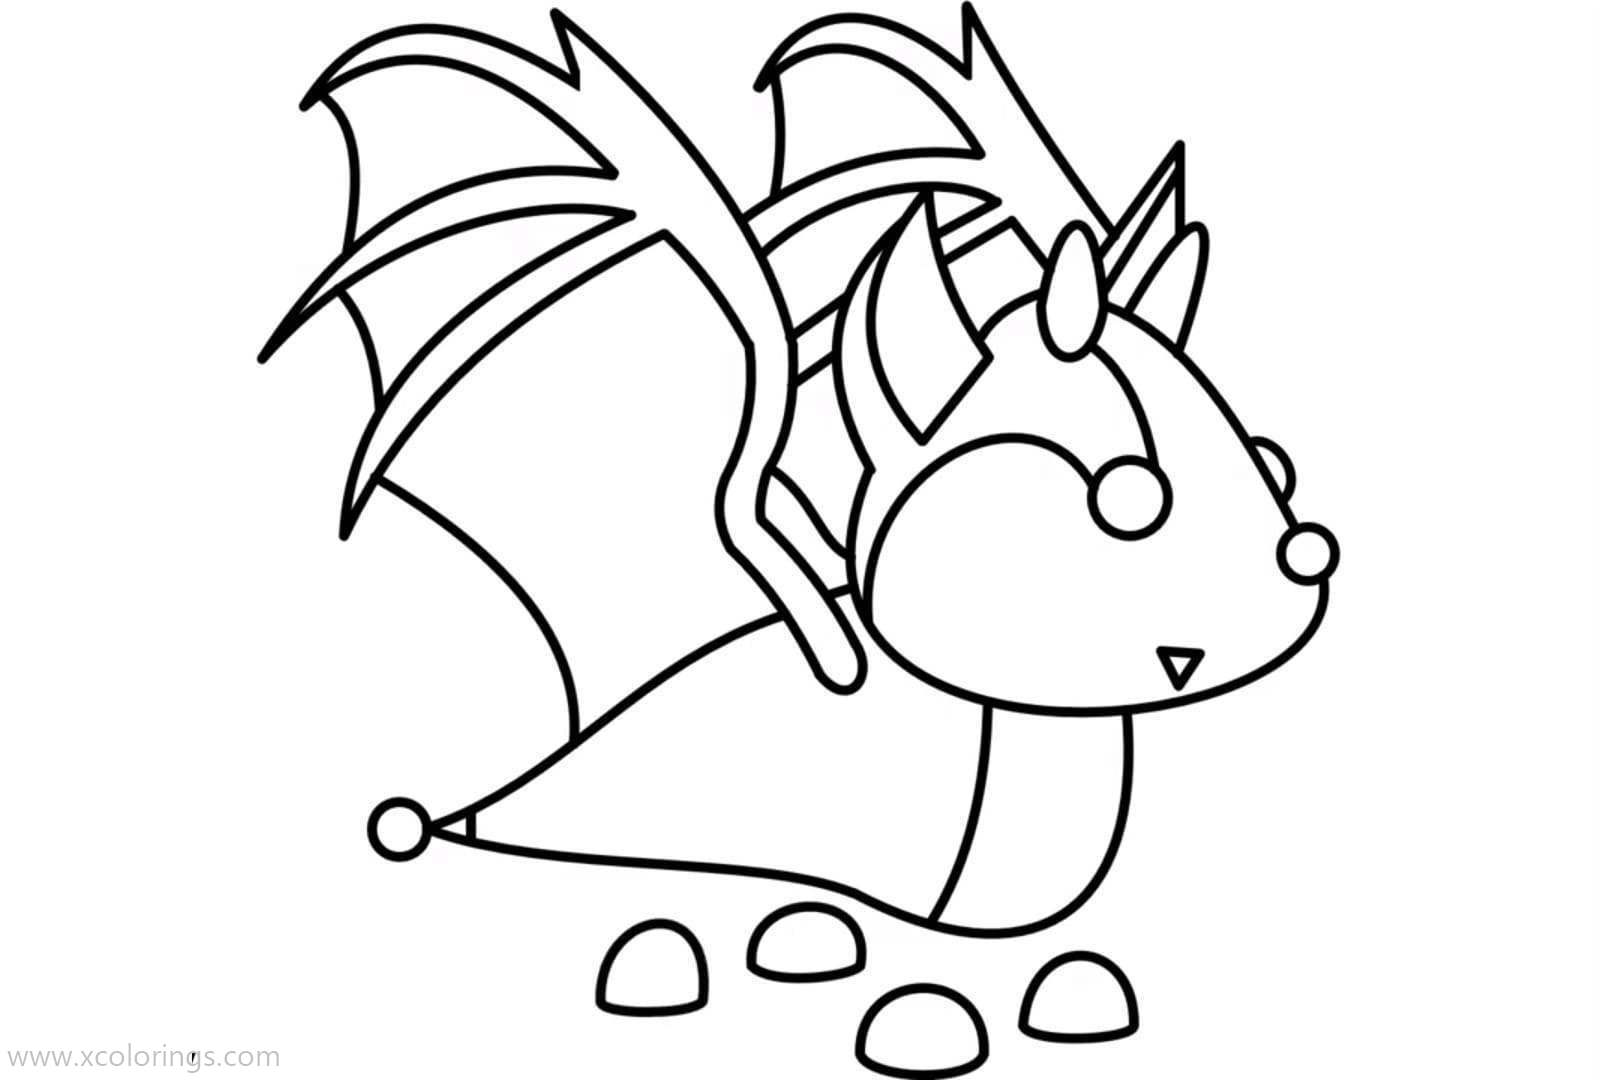 Roblox Adopt Me Coloring Pages Bat Dragon - XColorings.com